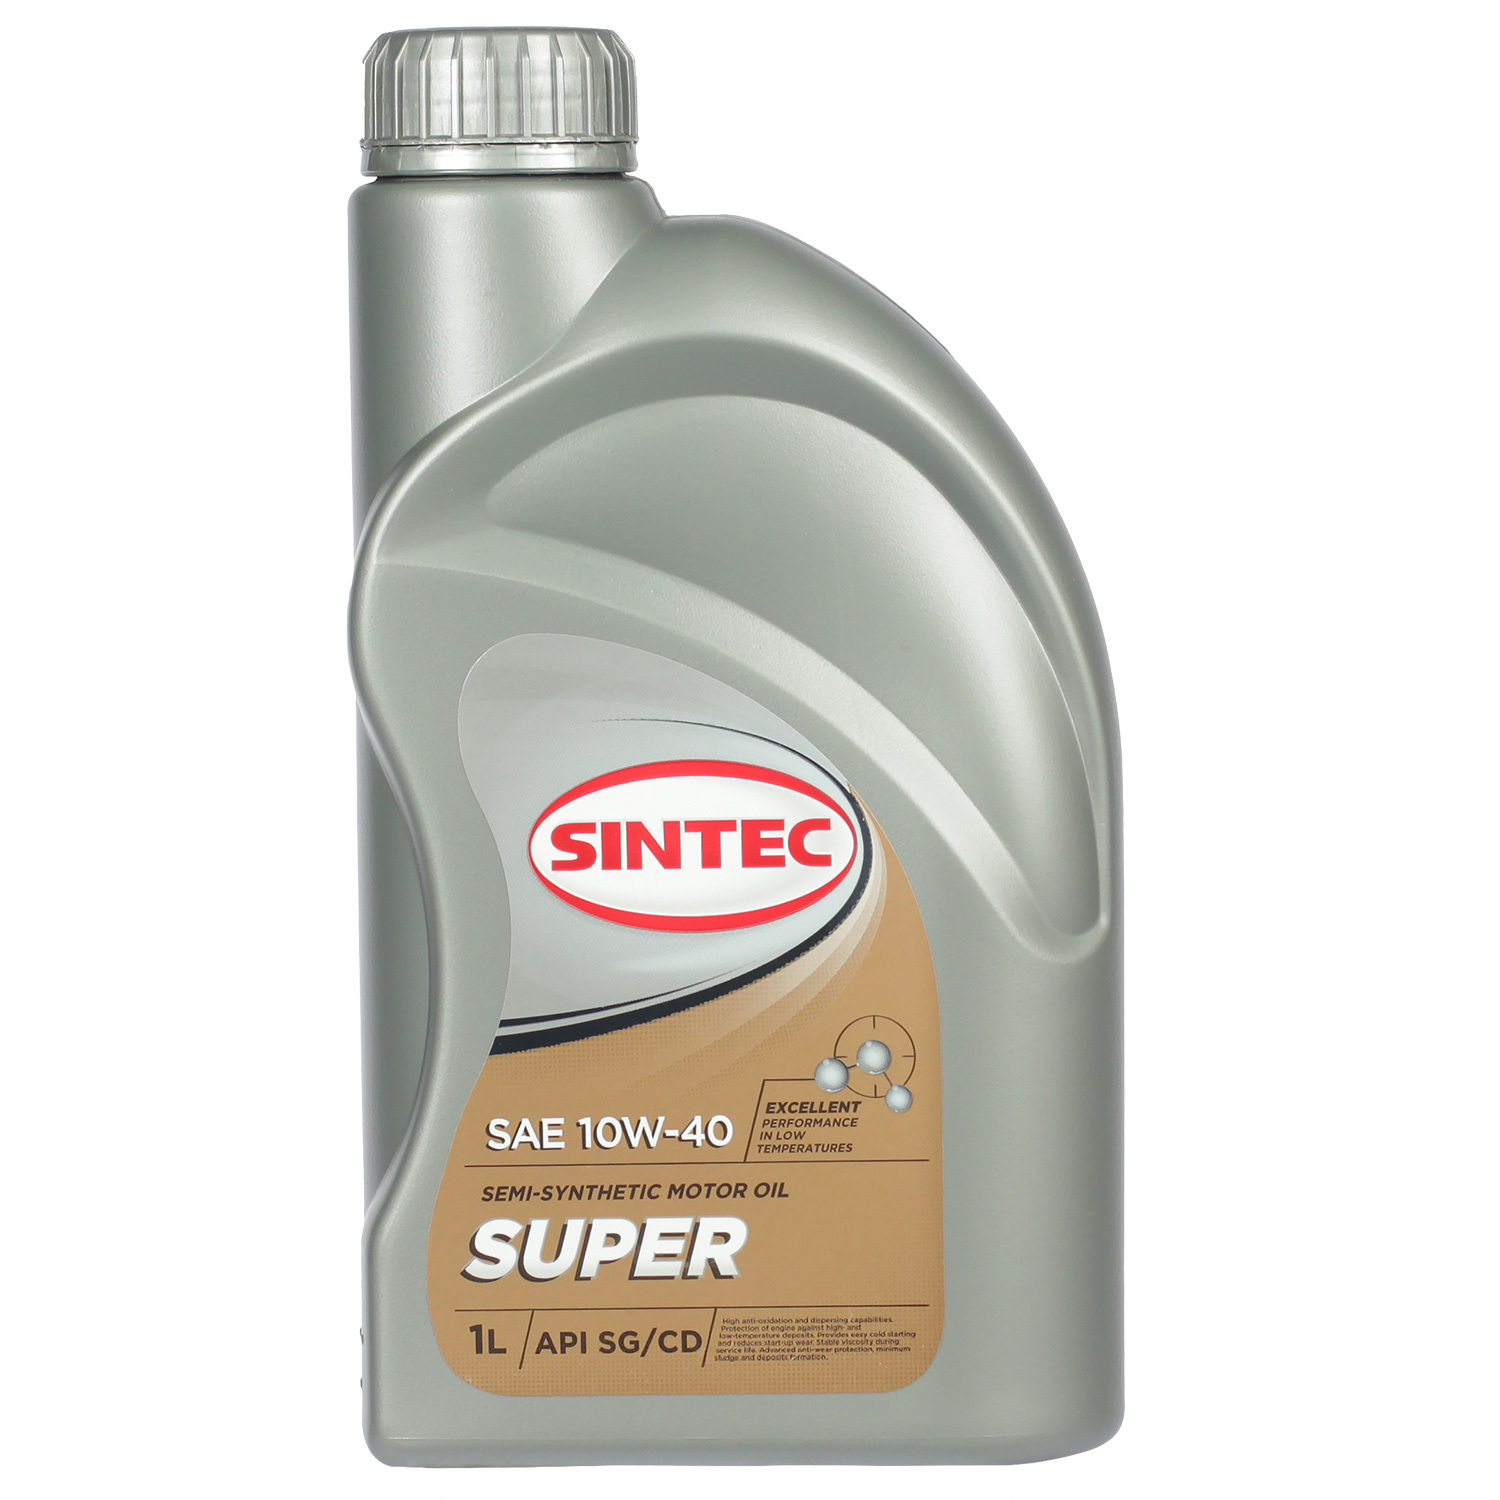 Sintec Моторное масло Sintec Super 3000 10W-40, 1 л sintec моторное масло sintec super 3000 10w 40 4 л